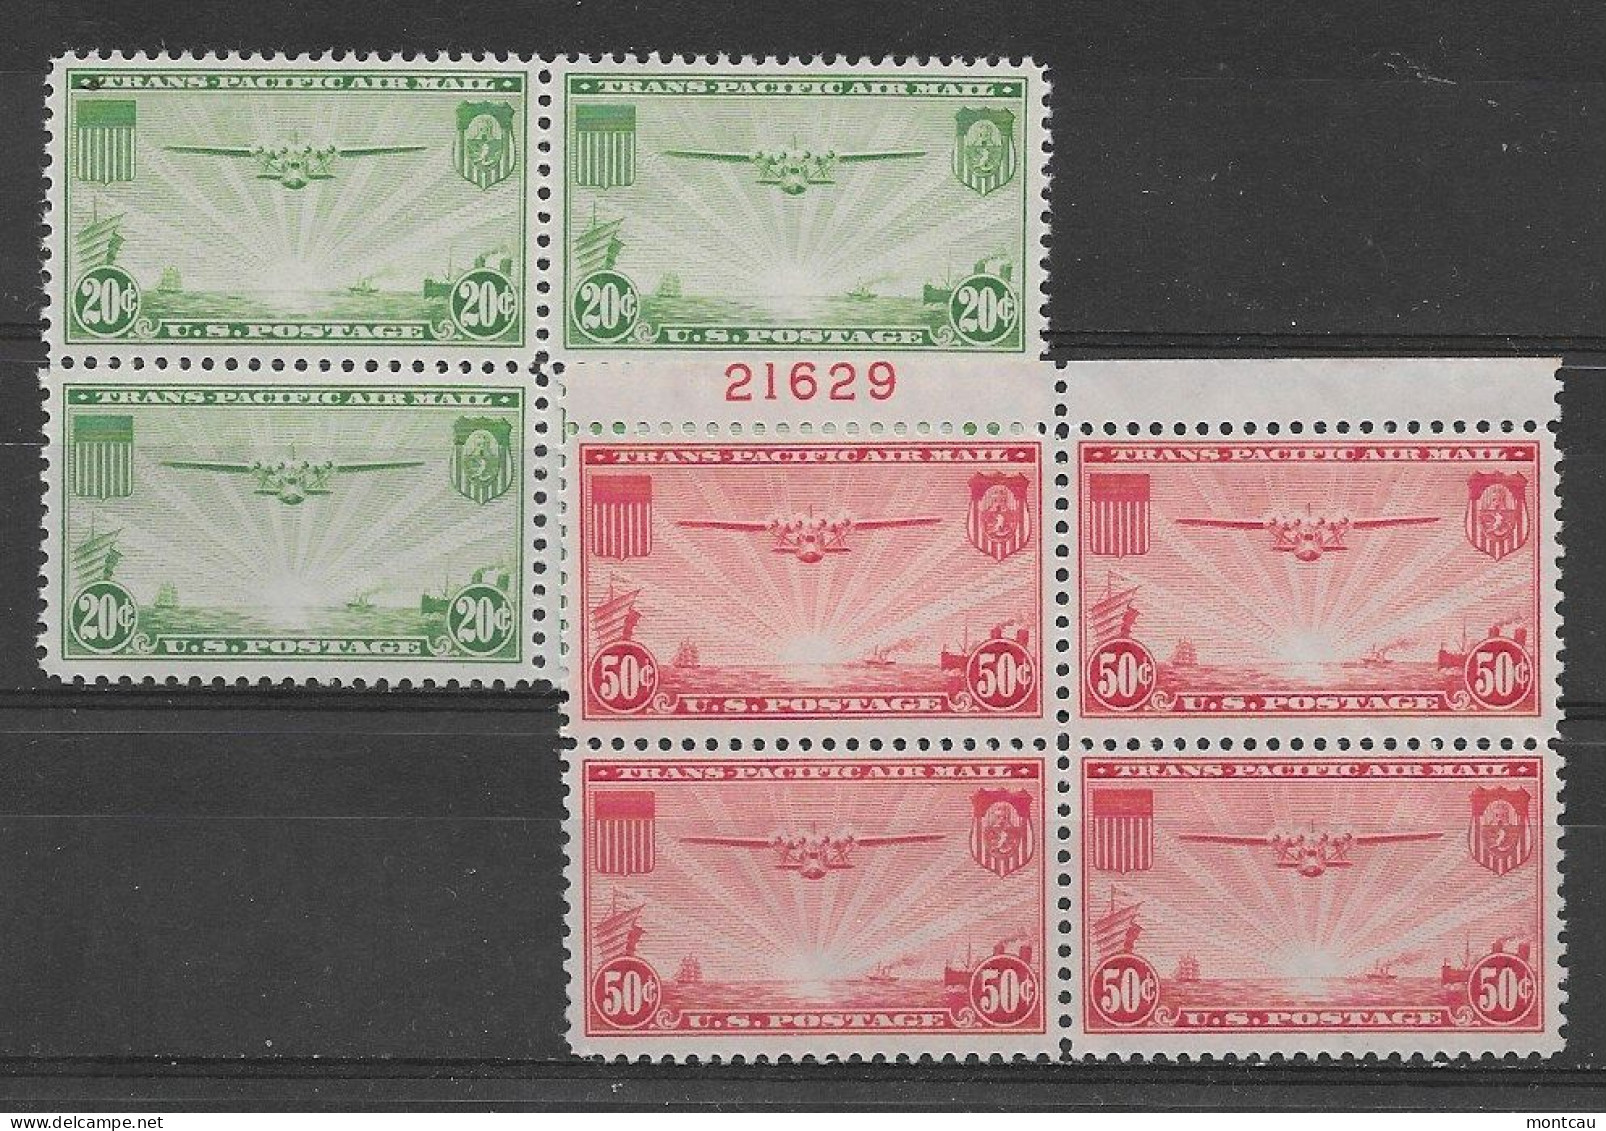 USA 1937.  Hawaii-Guam Sc C21-22  (**) - 1b. 1918-1940 Neufs